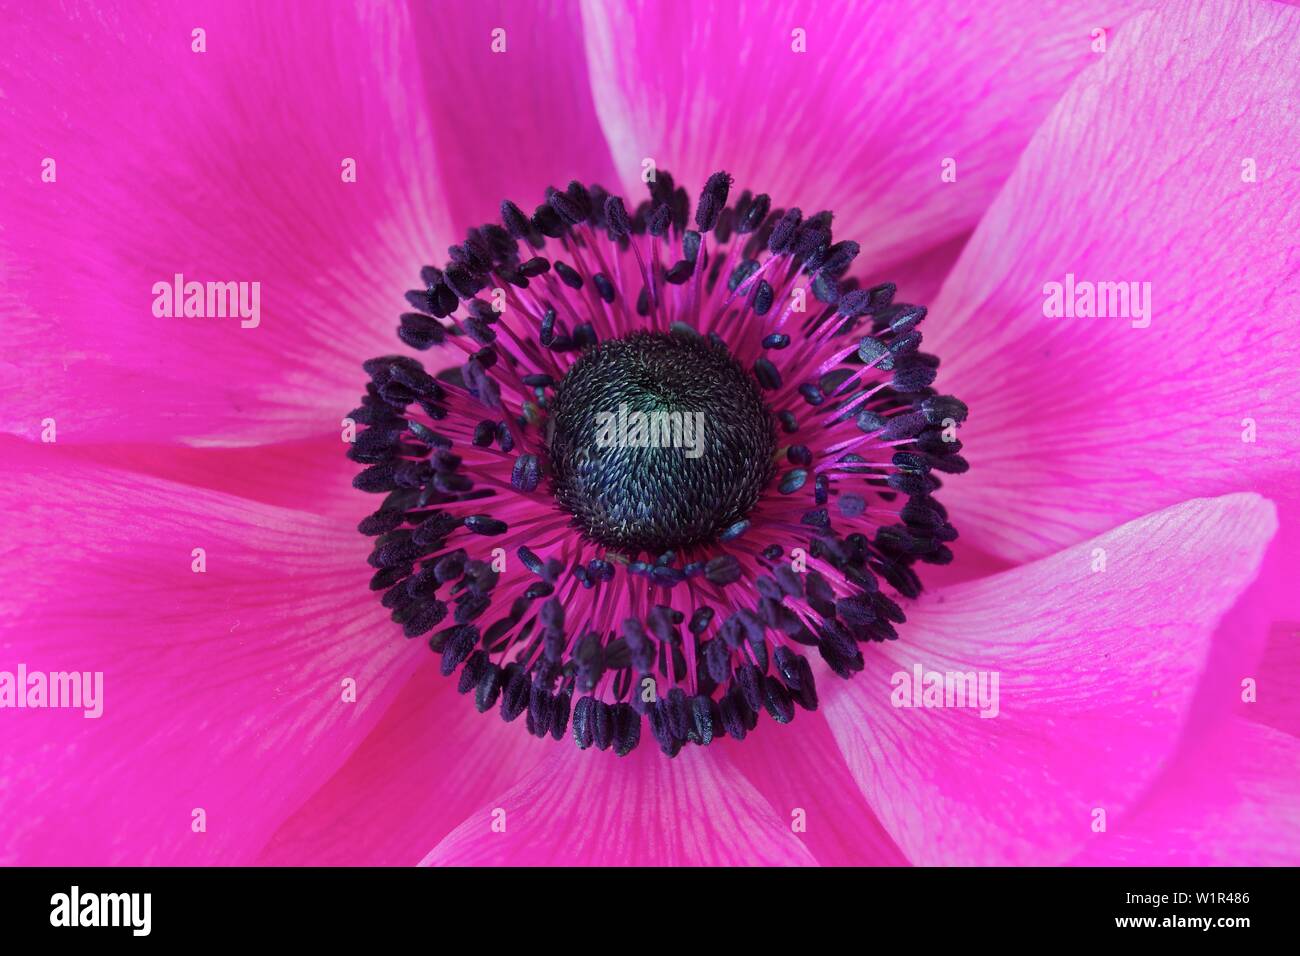 anemone closeup, violet leaves with black pistil Stock Photo